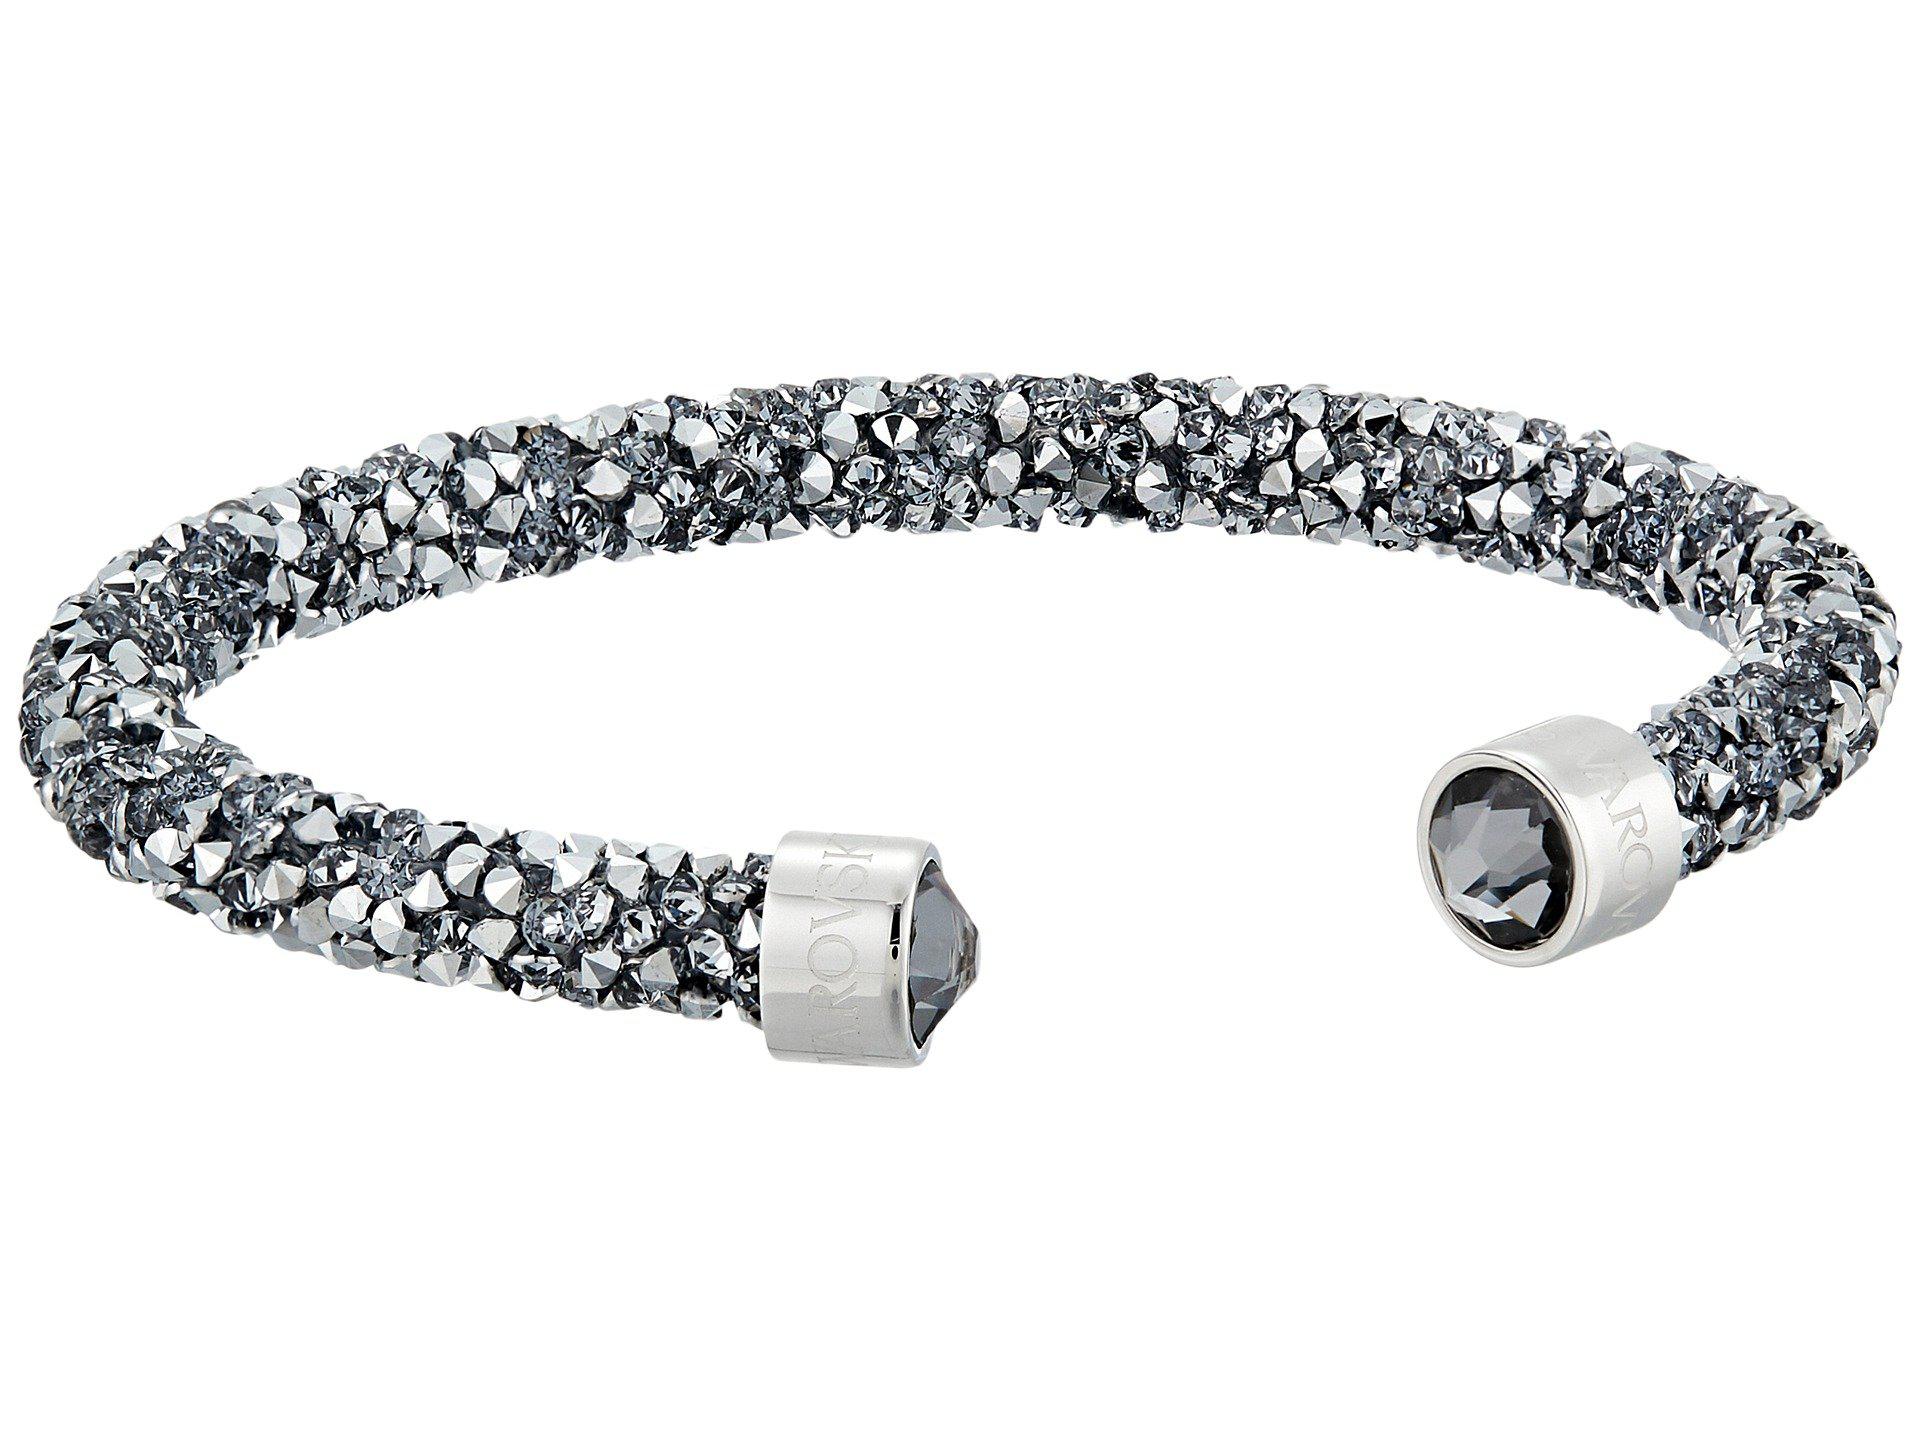 Lyst - Swarovski Crystaldust Cuff Bracelet (grey) Bracelet in Gray